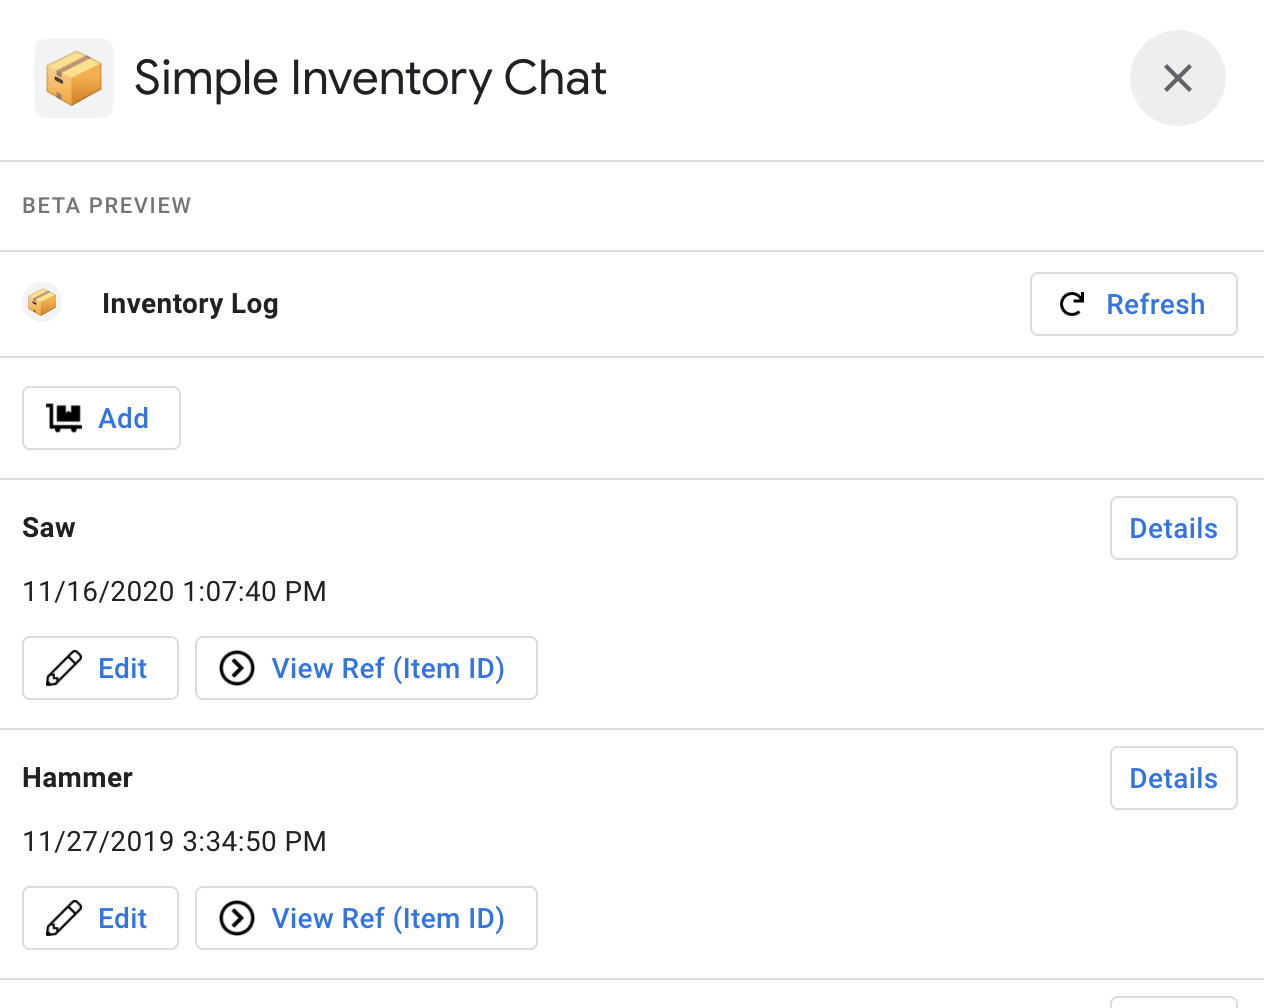 简单的 Inventory Chat 应用。